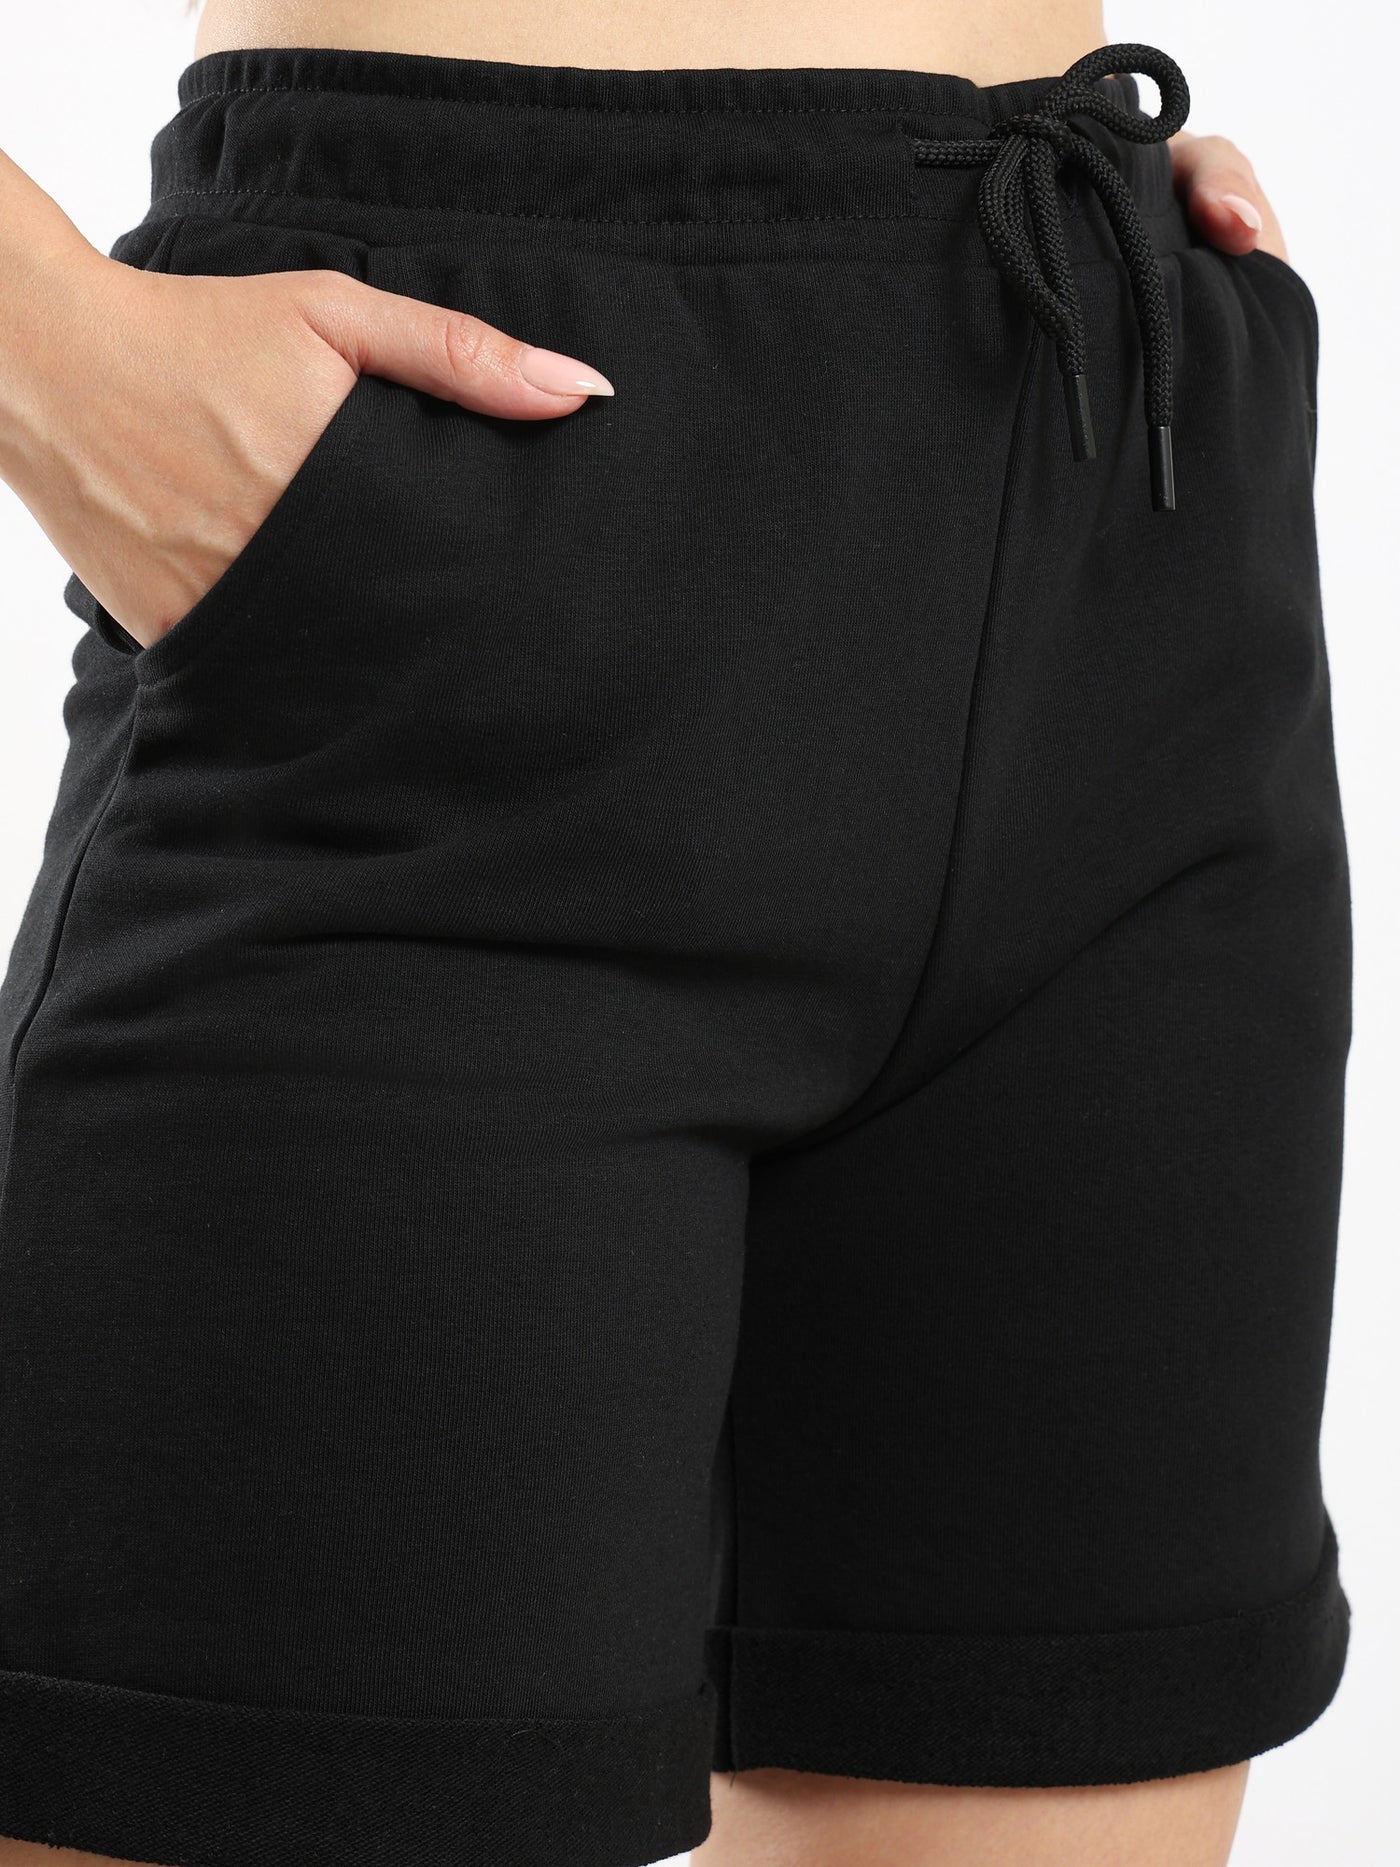 Short - Side Pockets - Solid